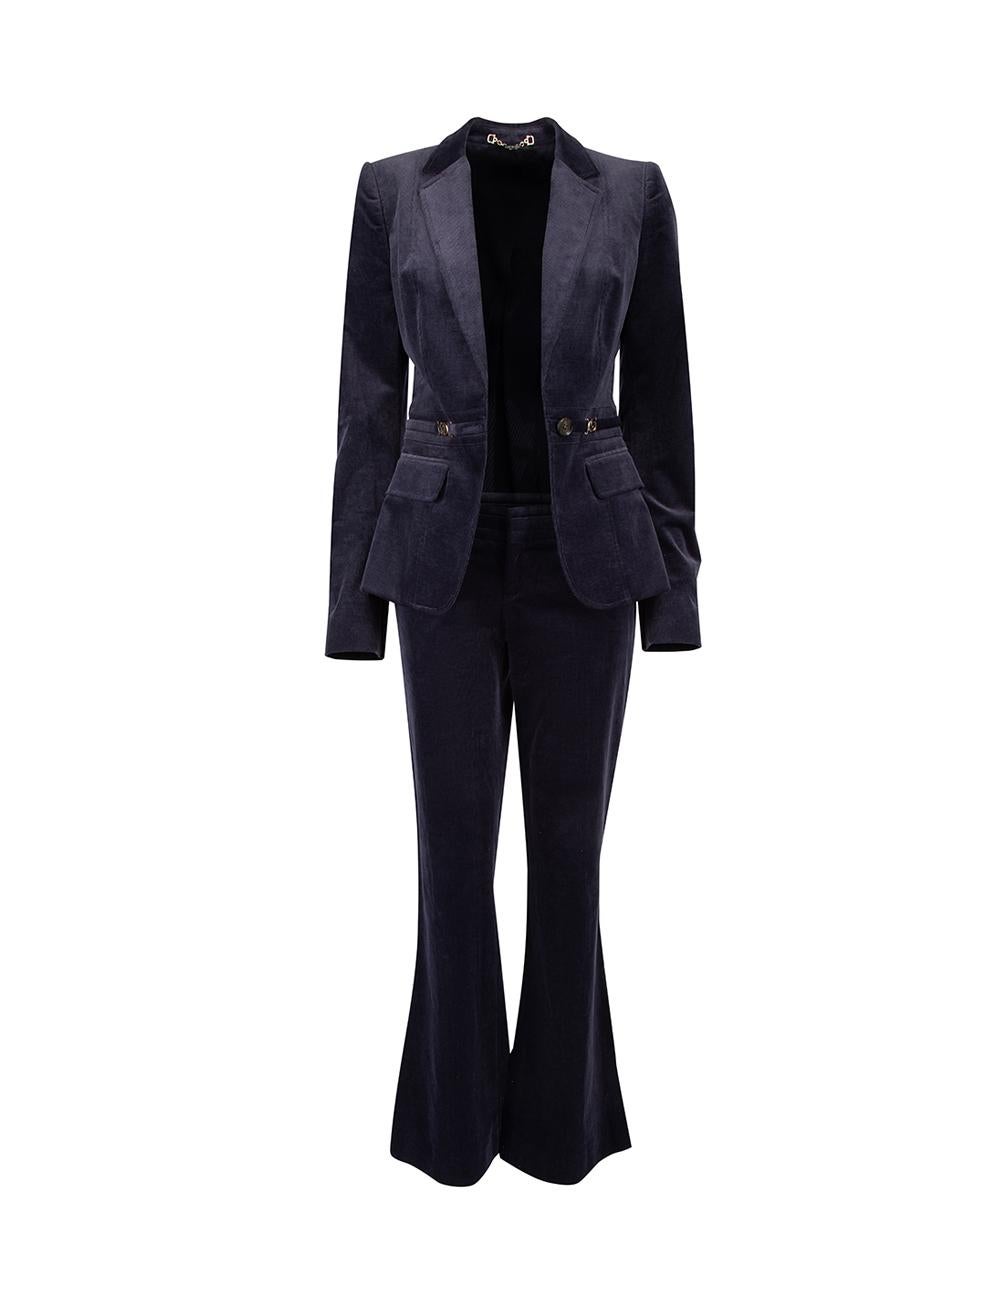 Pre-Loved Gucci Women's Purple Corduroy Blazer and Trouser Suit Set 1